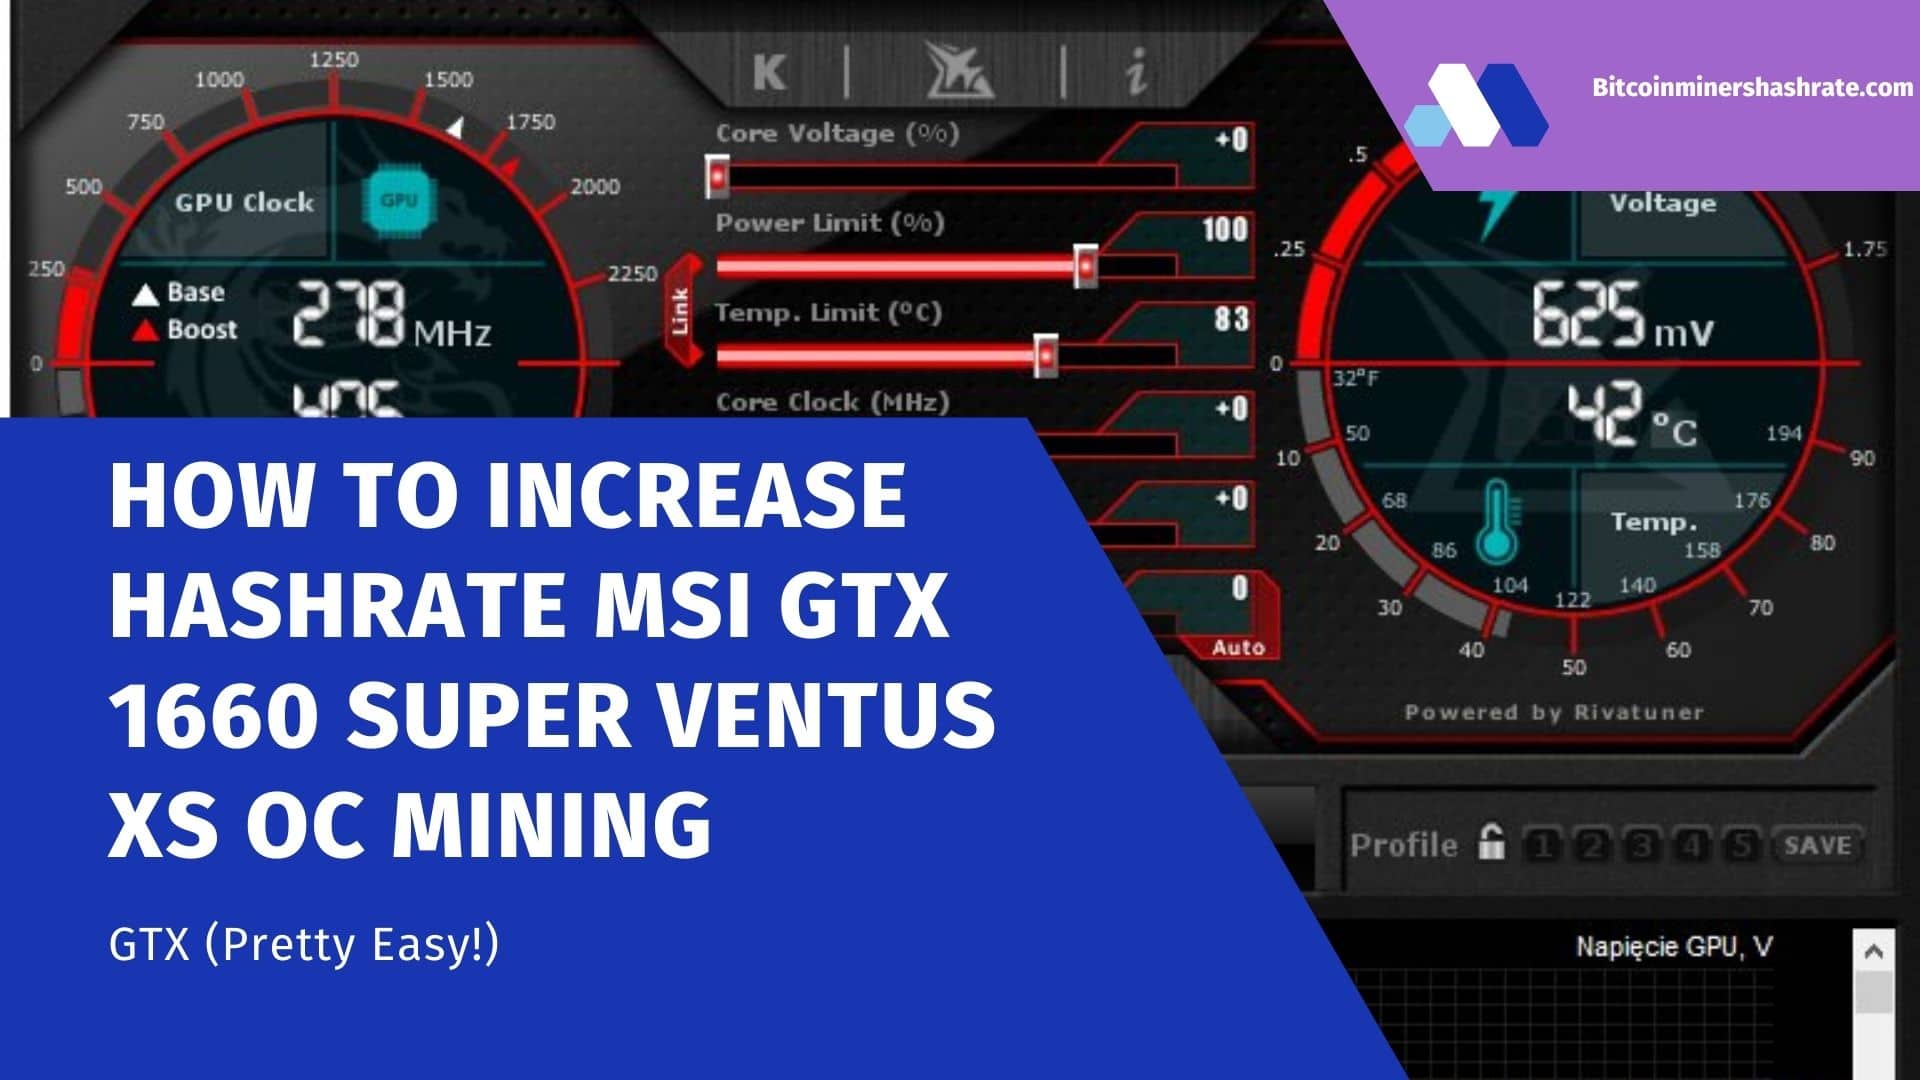 How to increase Hashrate MSI GTX 1660 super ventus xs oc mining